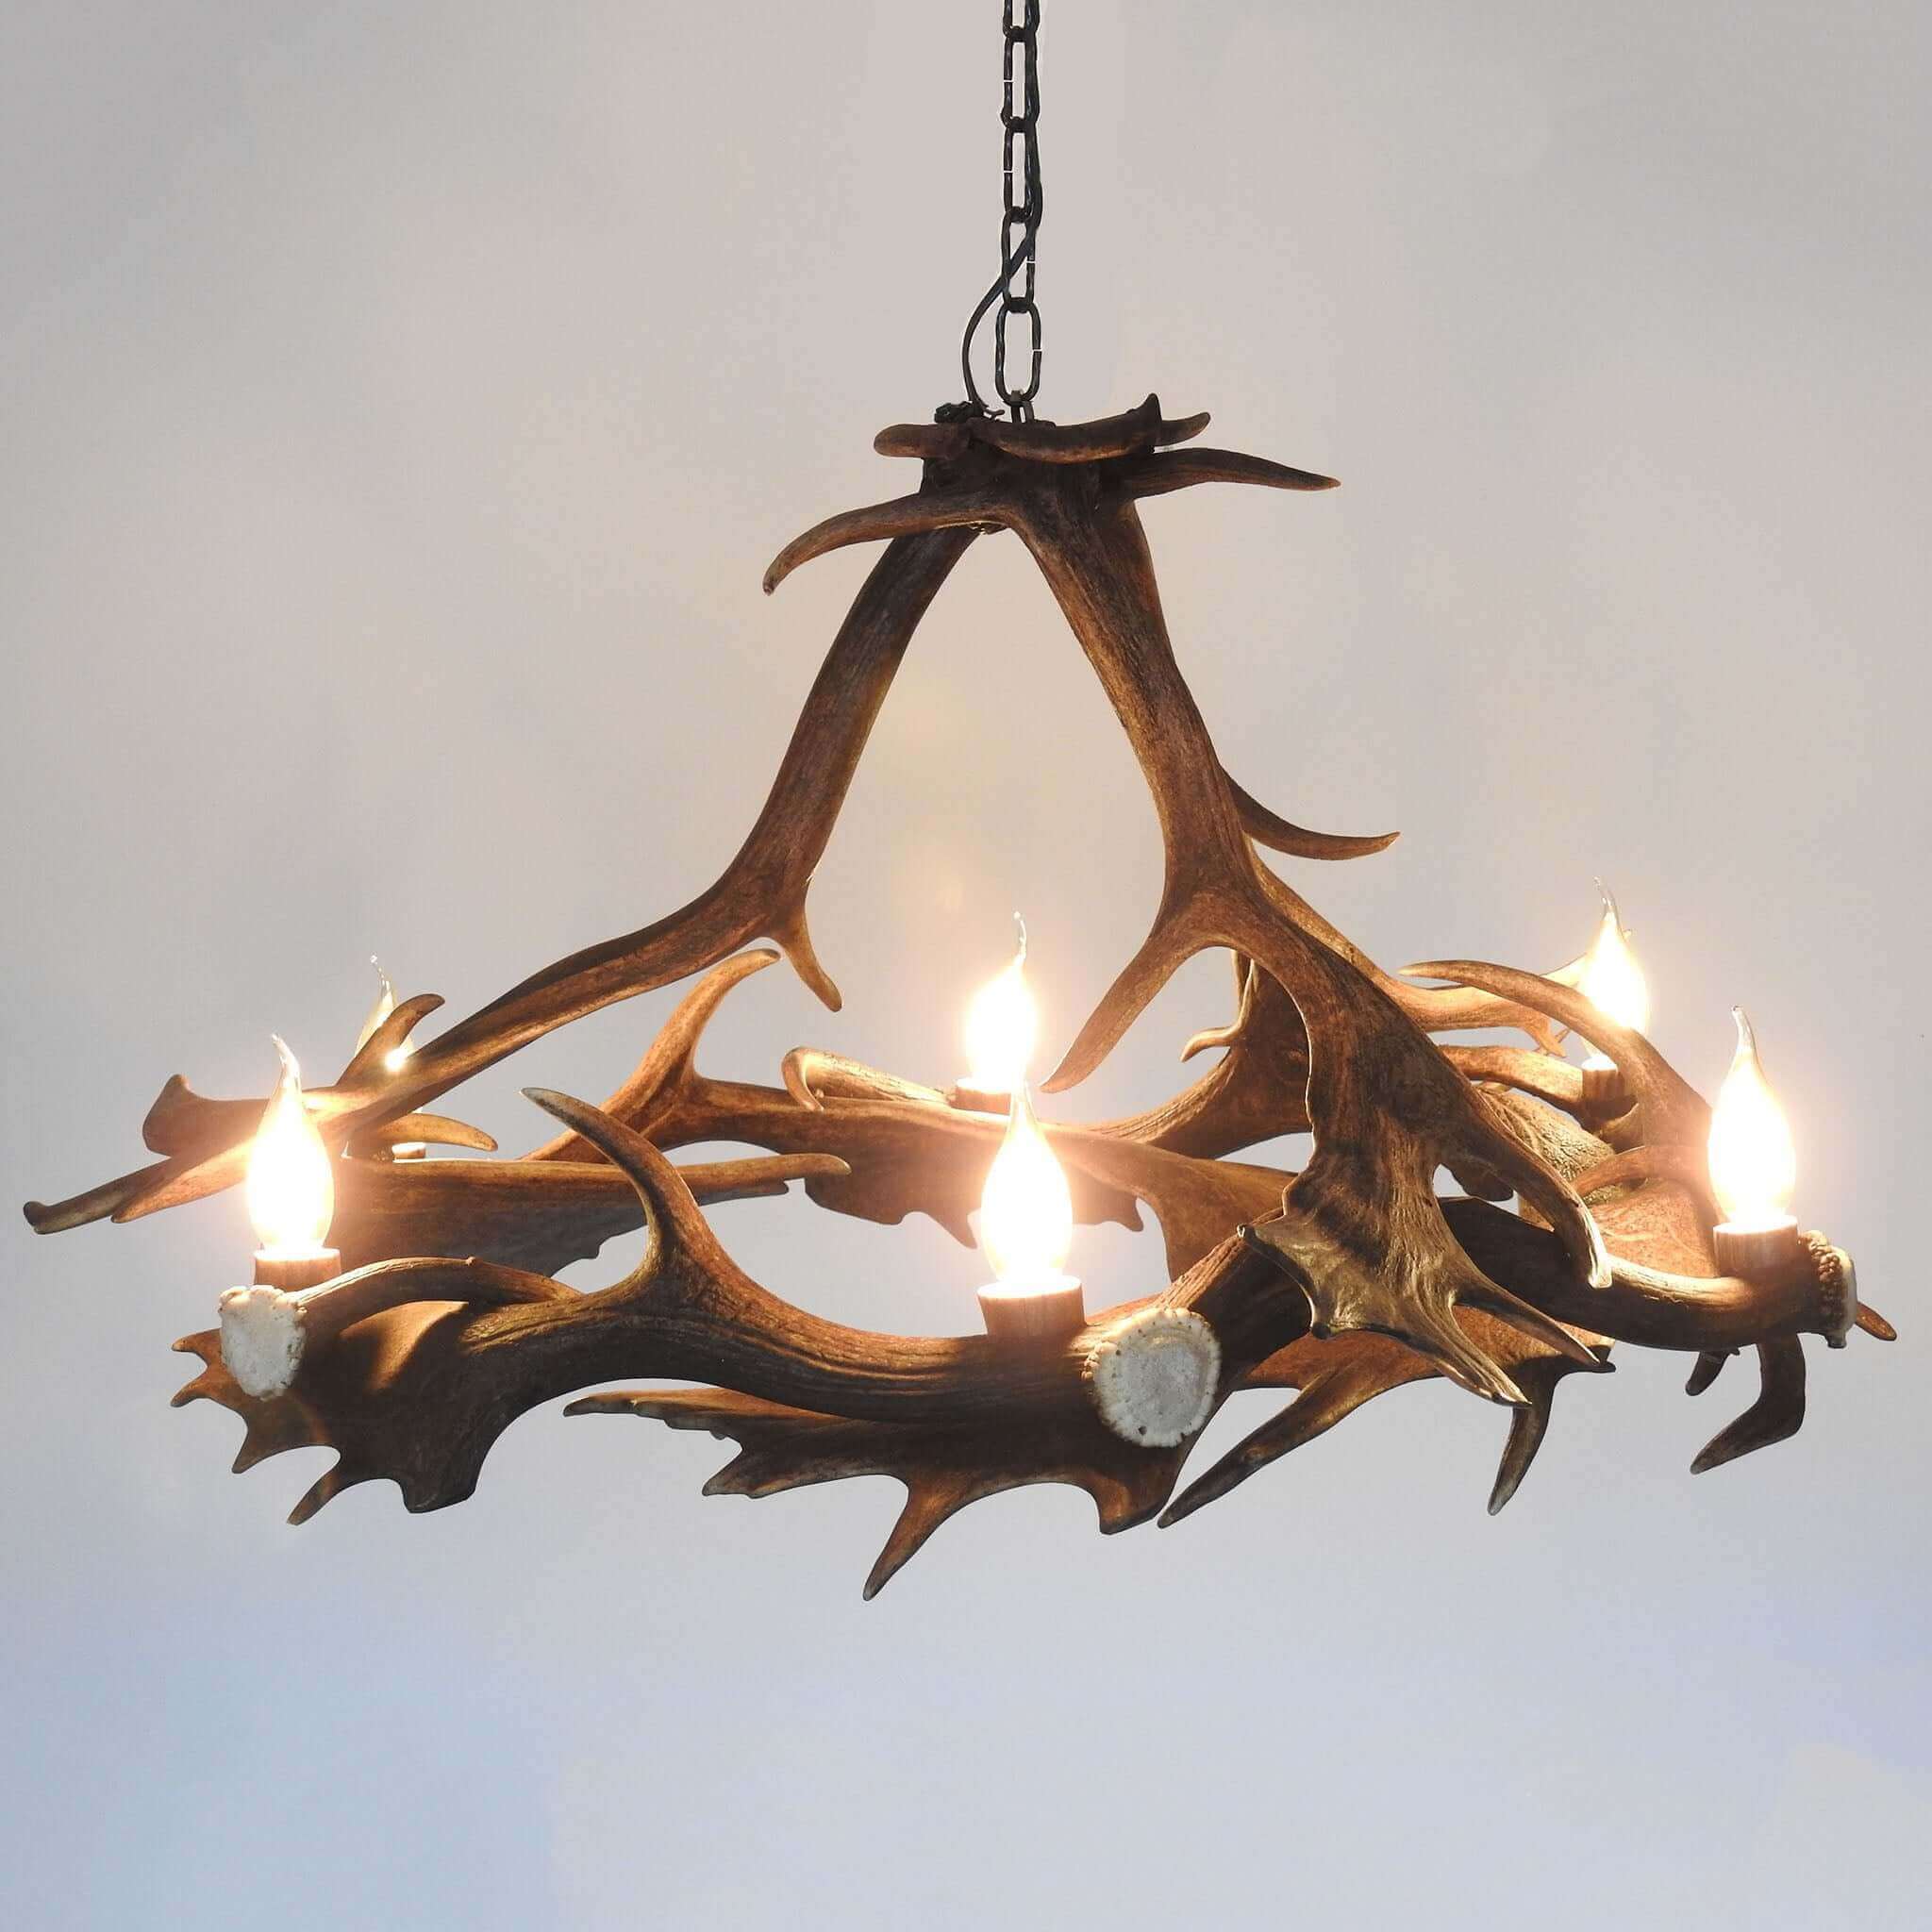 Real deer antler chandelier.